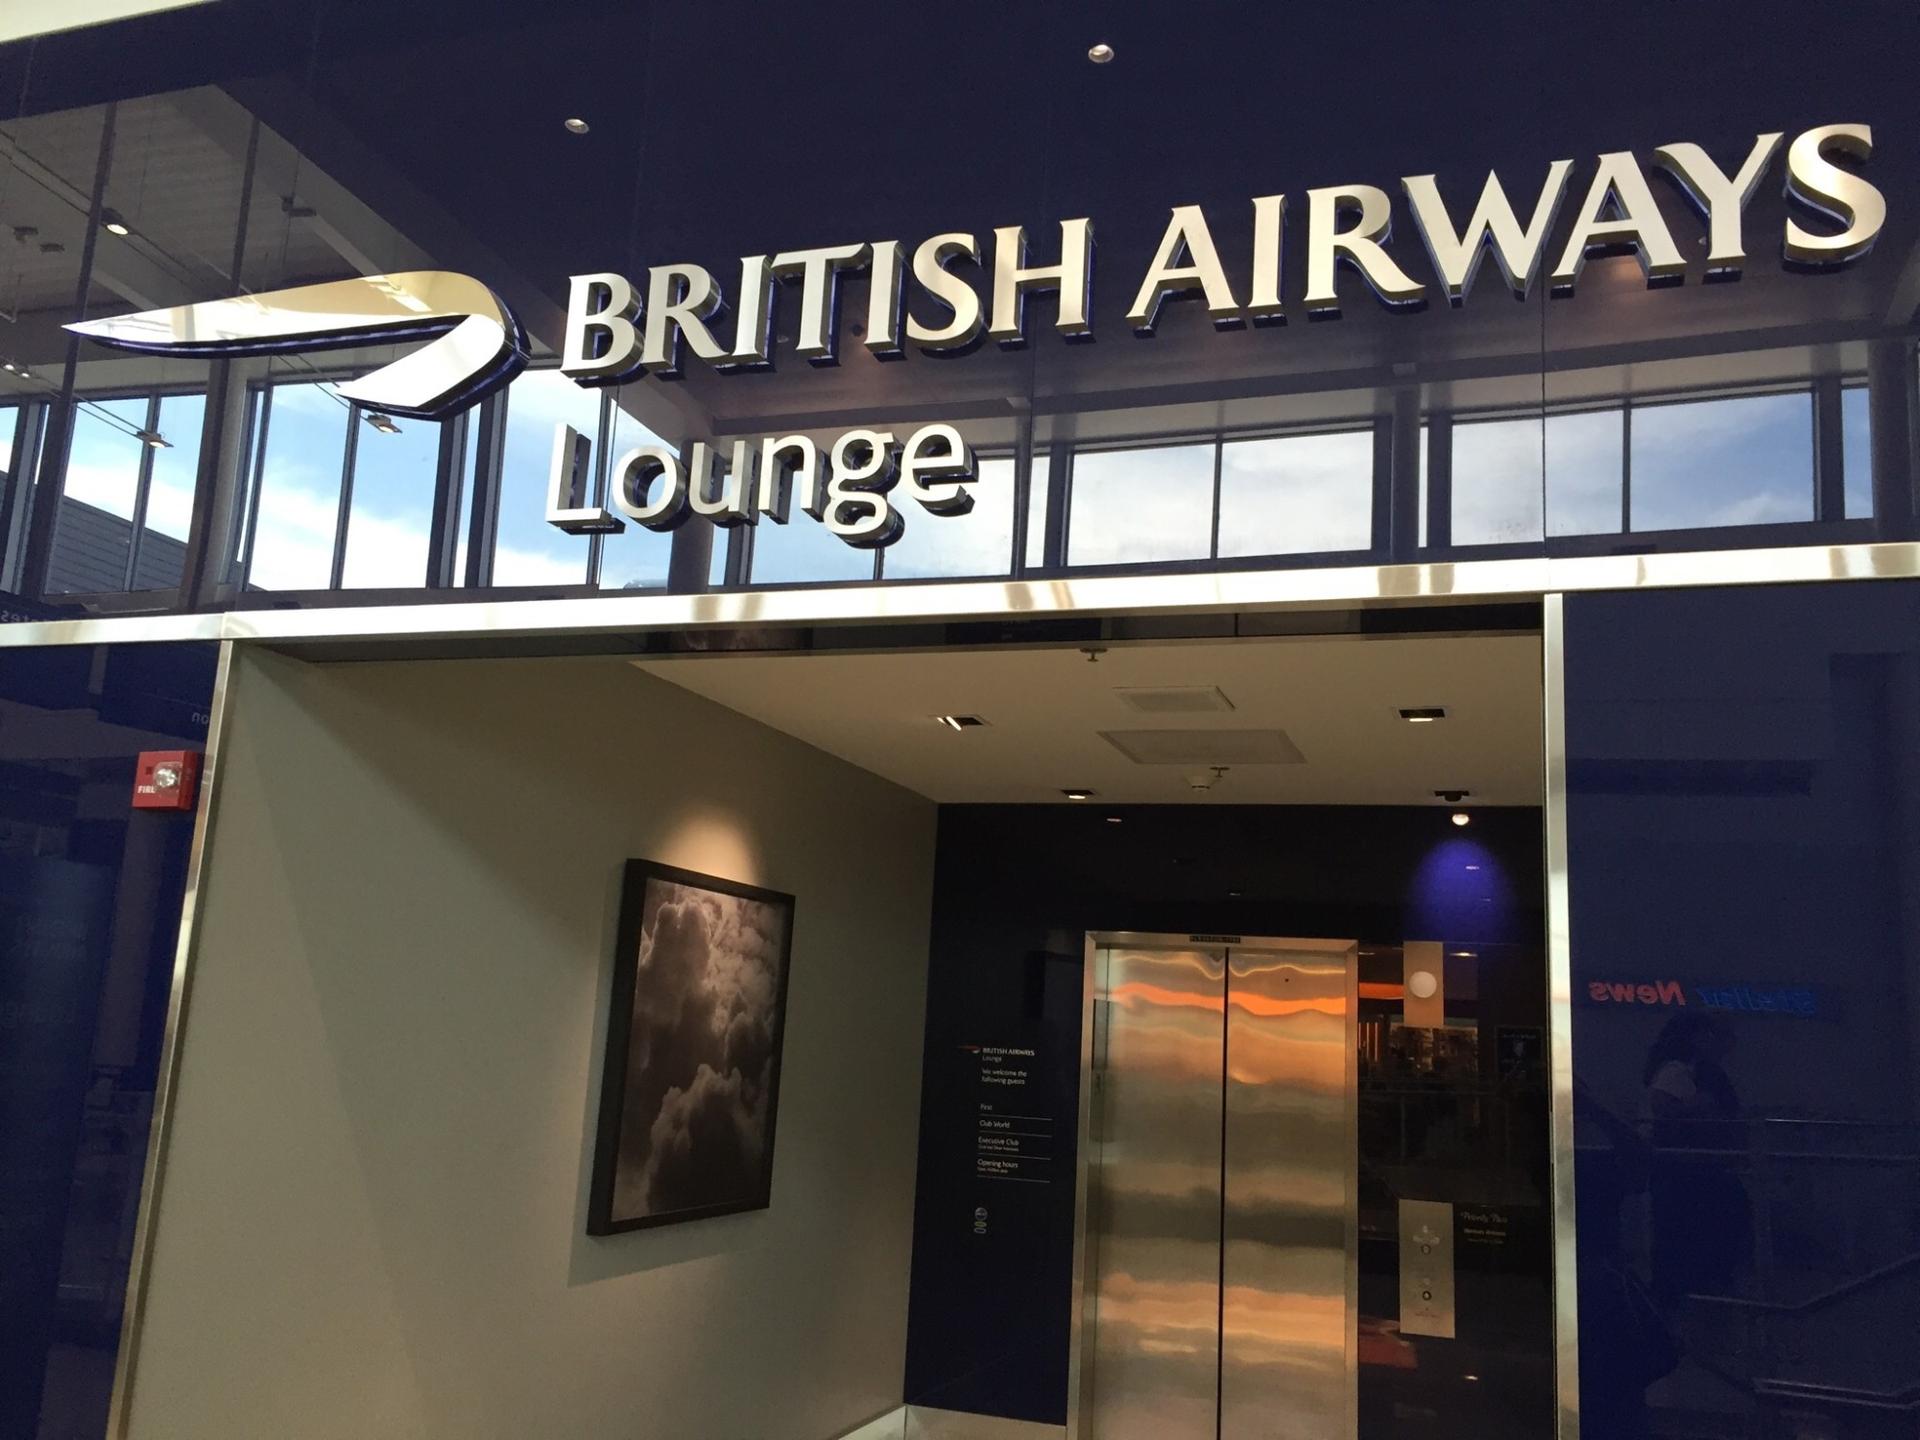 British Airways Galleries Lounge image 29 of 29